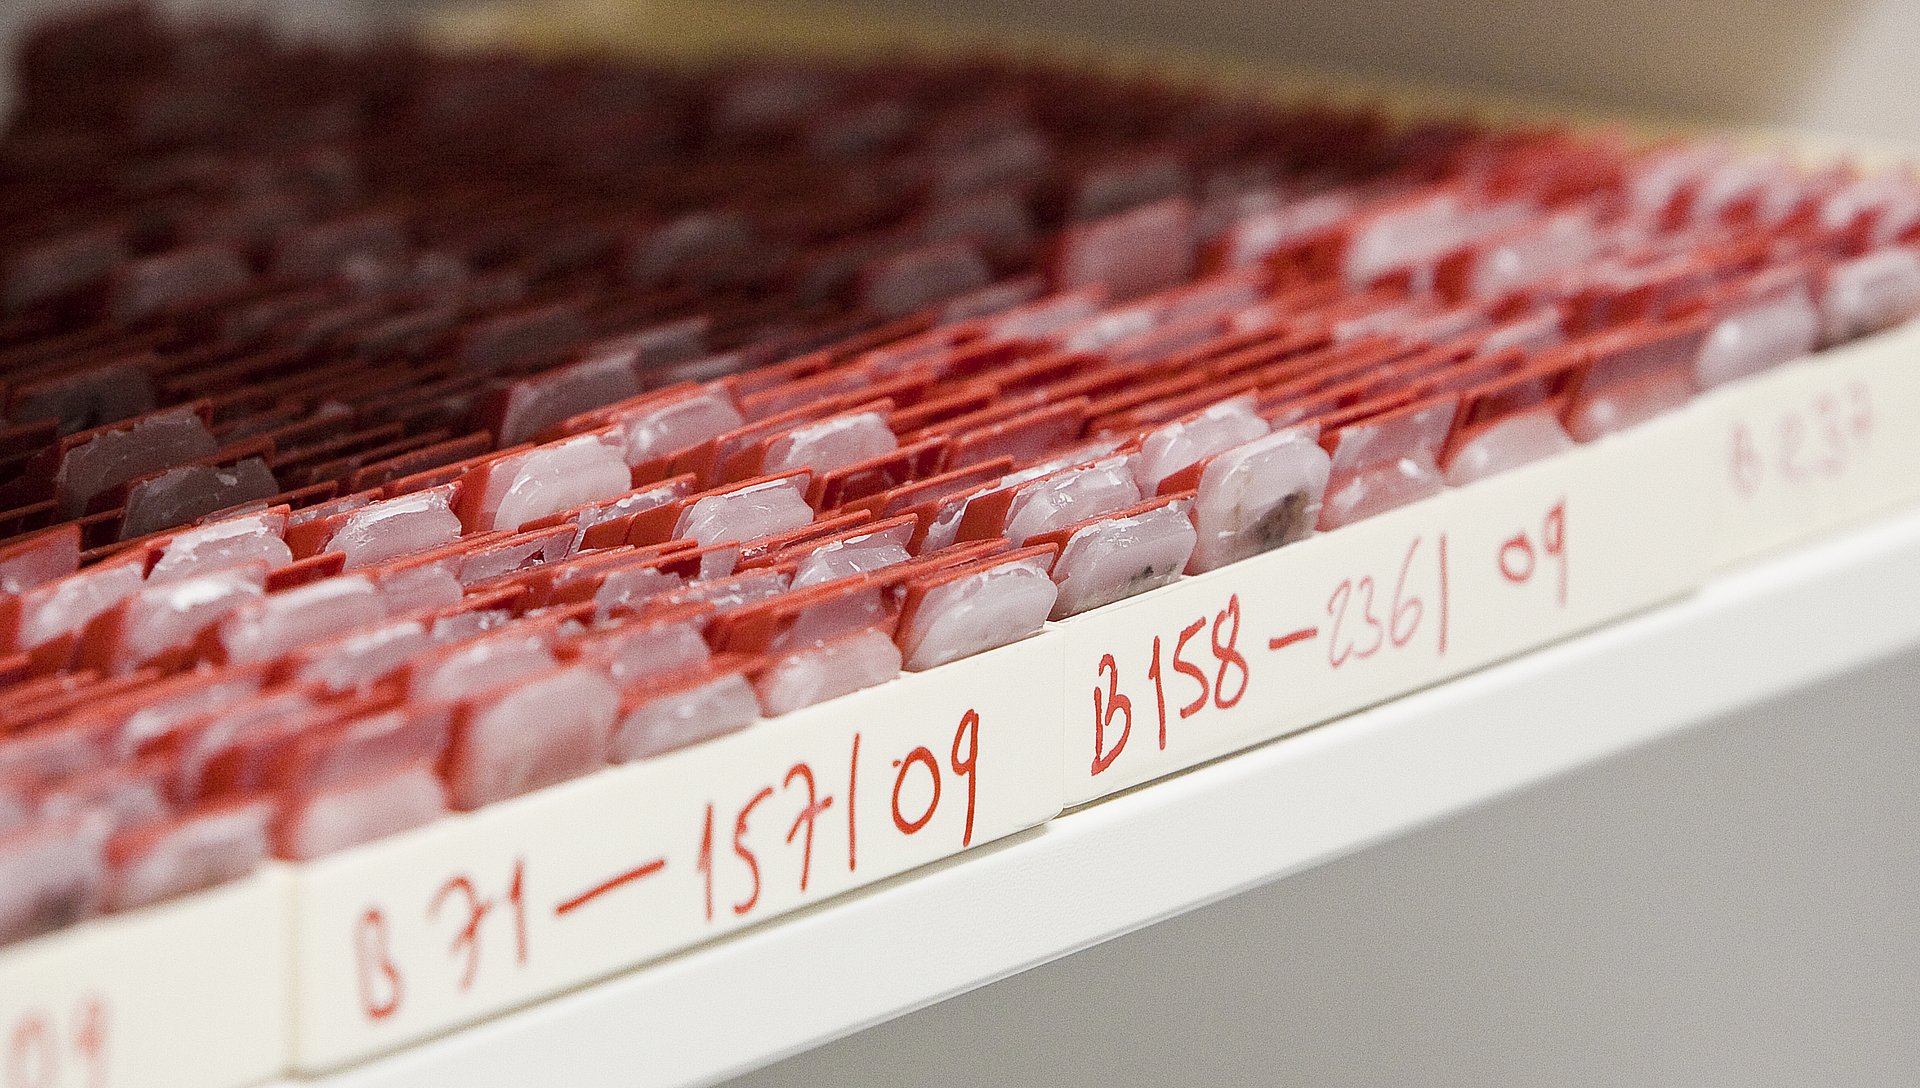 Clinical tissue samples - image: S. Willax/TU München